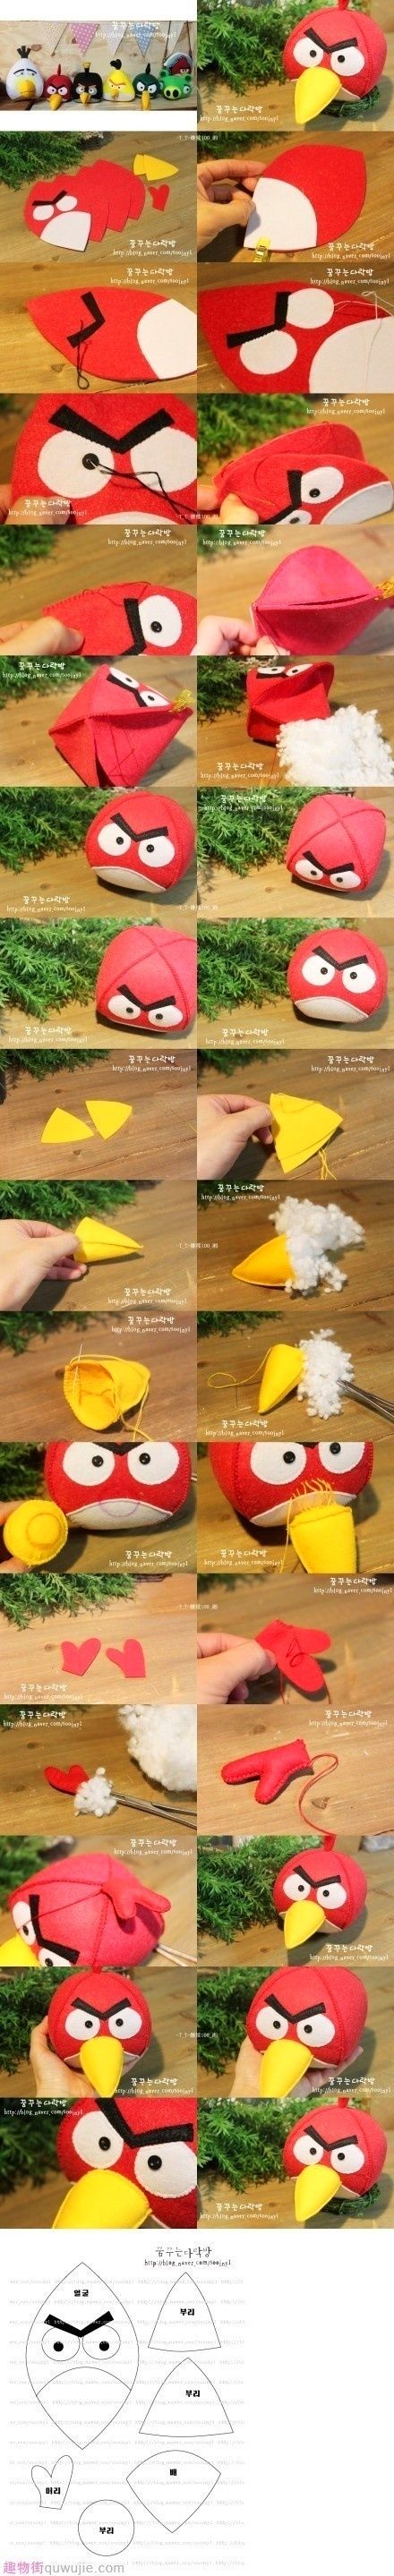 DIY Angry Bird Doll